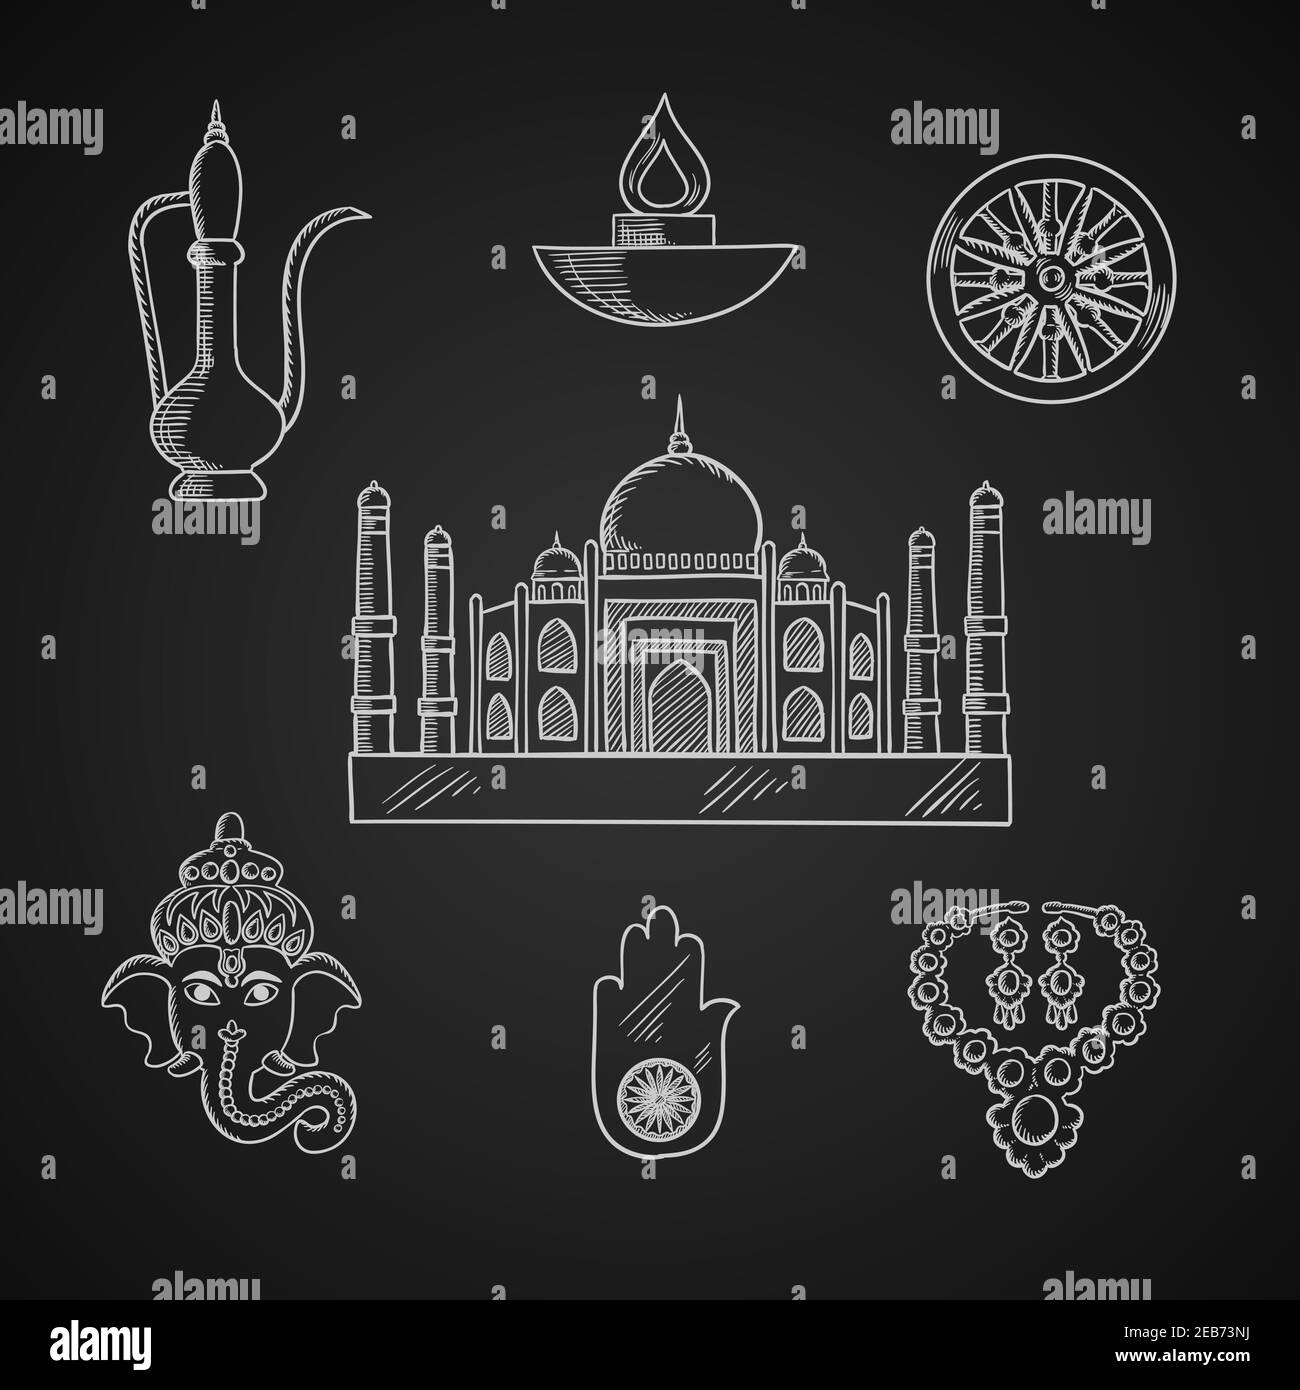 Indian religion and culture symbols with Ganesha God, ashoka Chakra wheel and hamsa hand amulet, brass teapot and ethnic jewelry, Diwali lamp and Taj Stock Vector